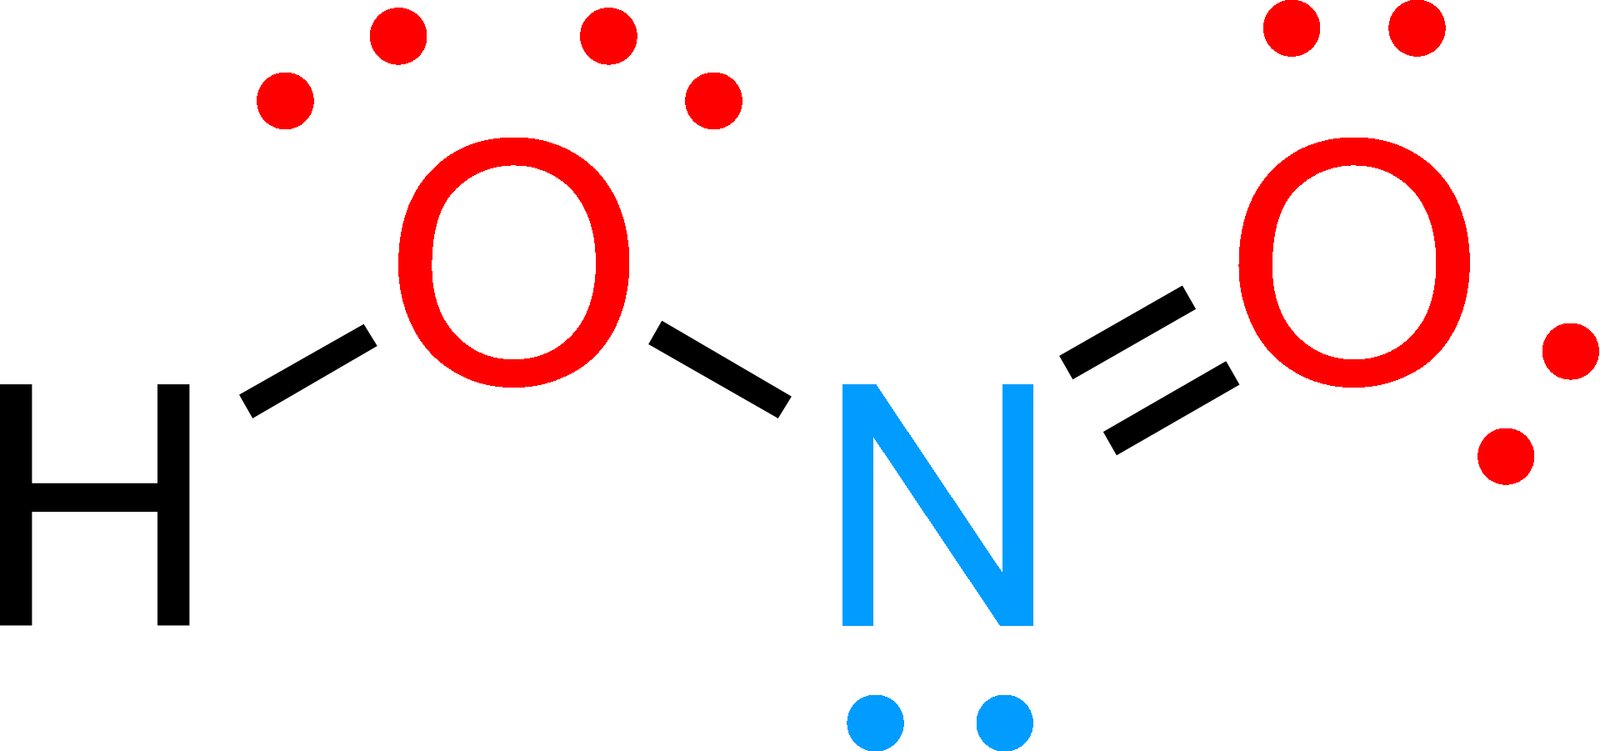 حمض النيتروز (حمض النتروز) Nitrous acid